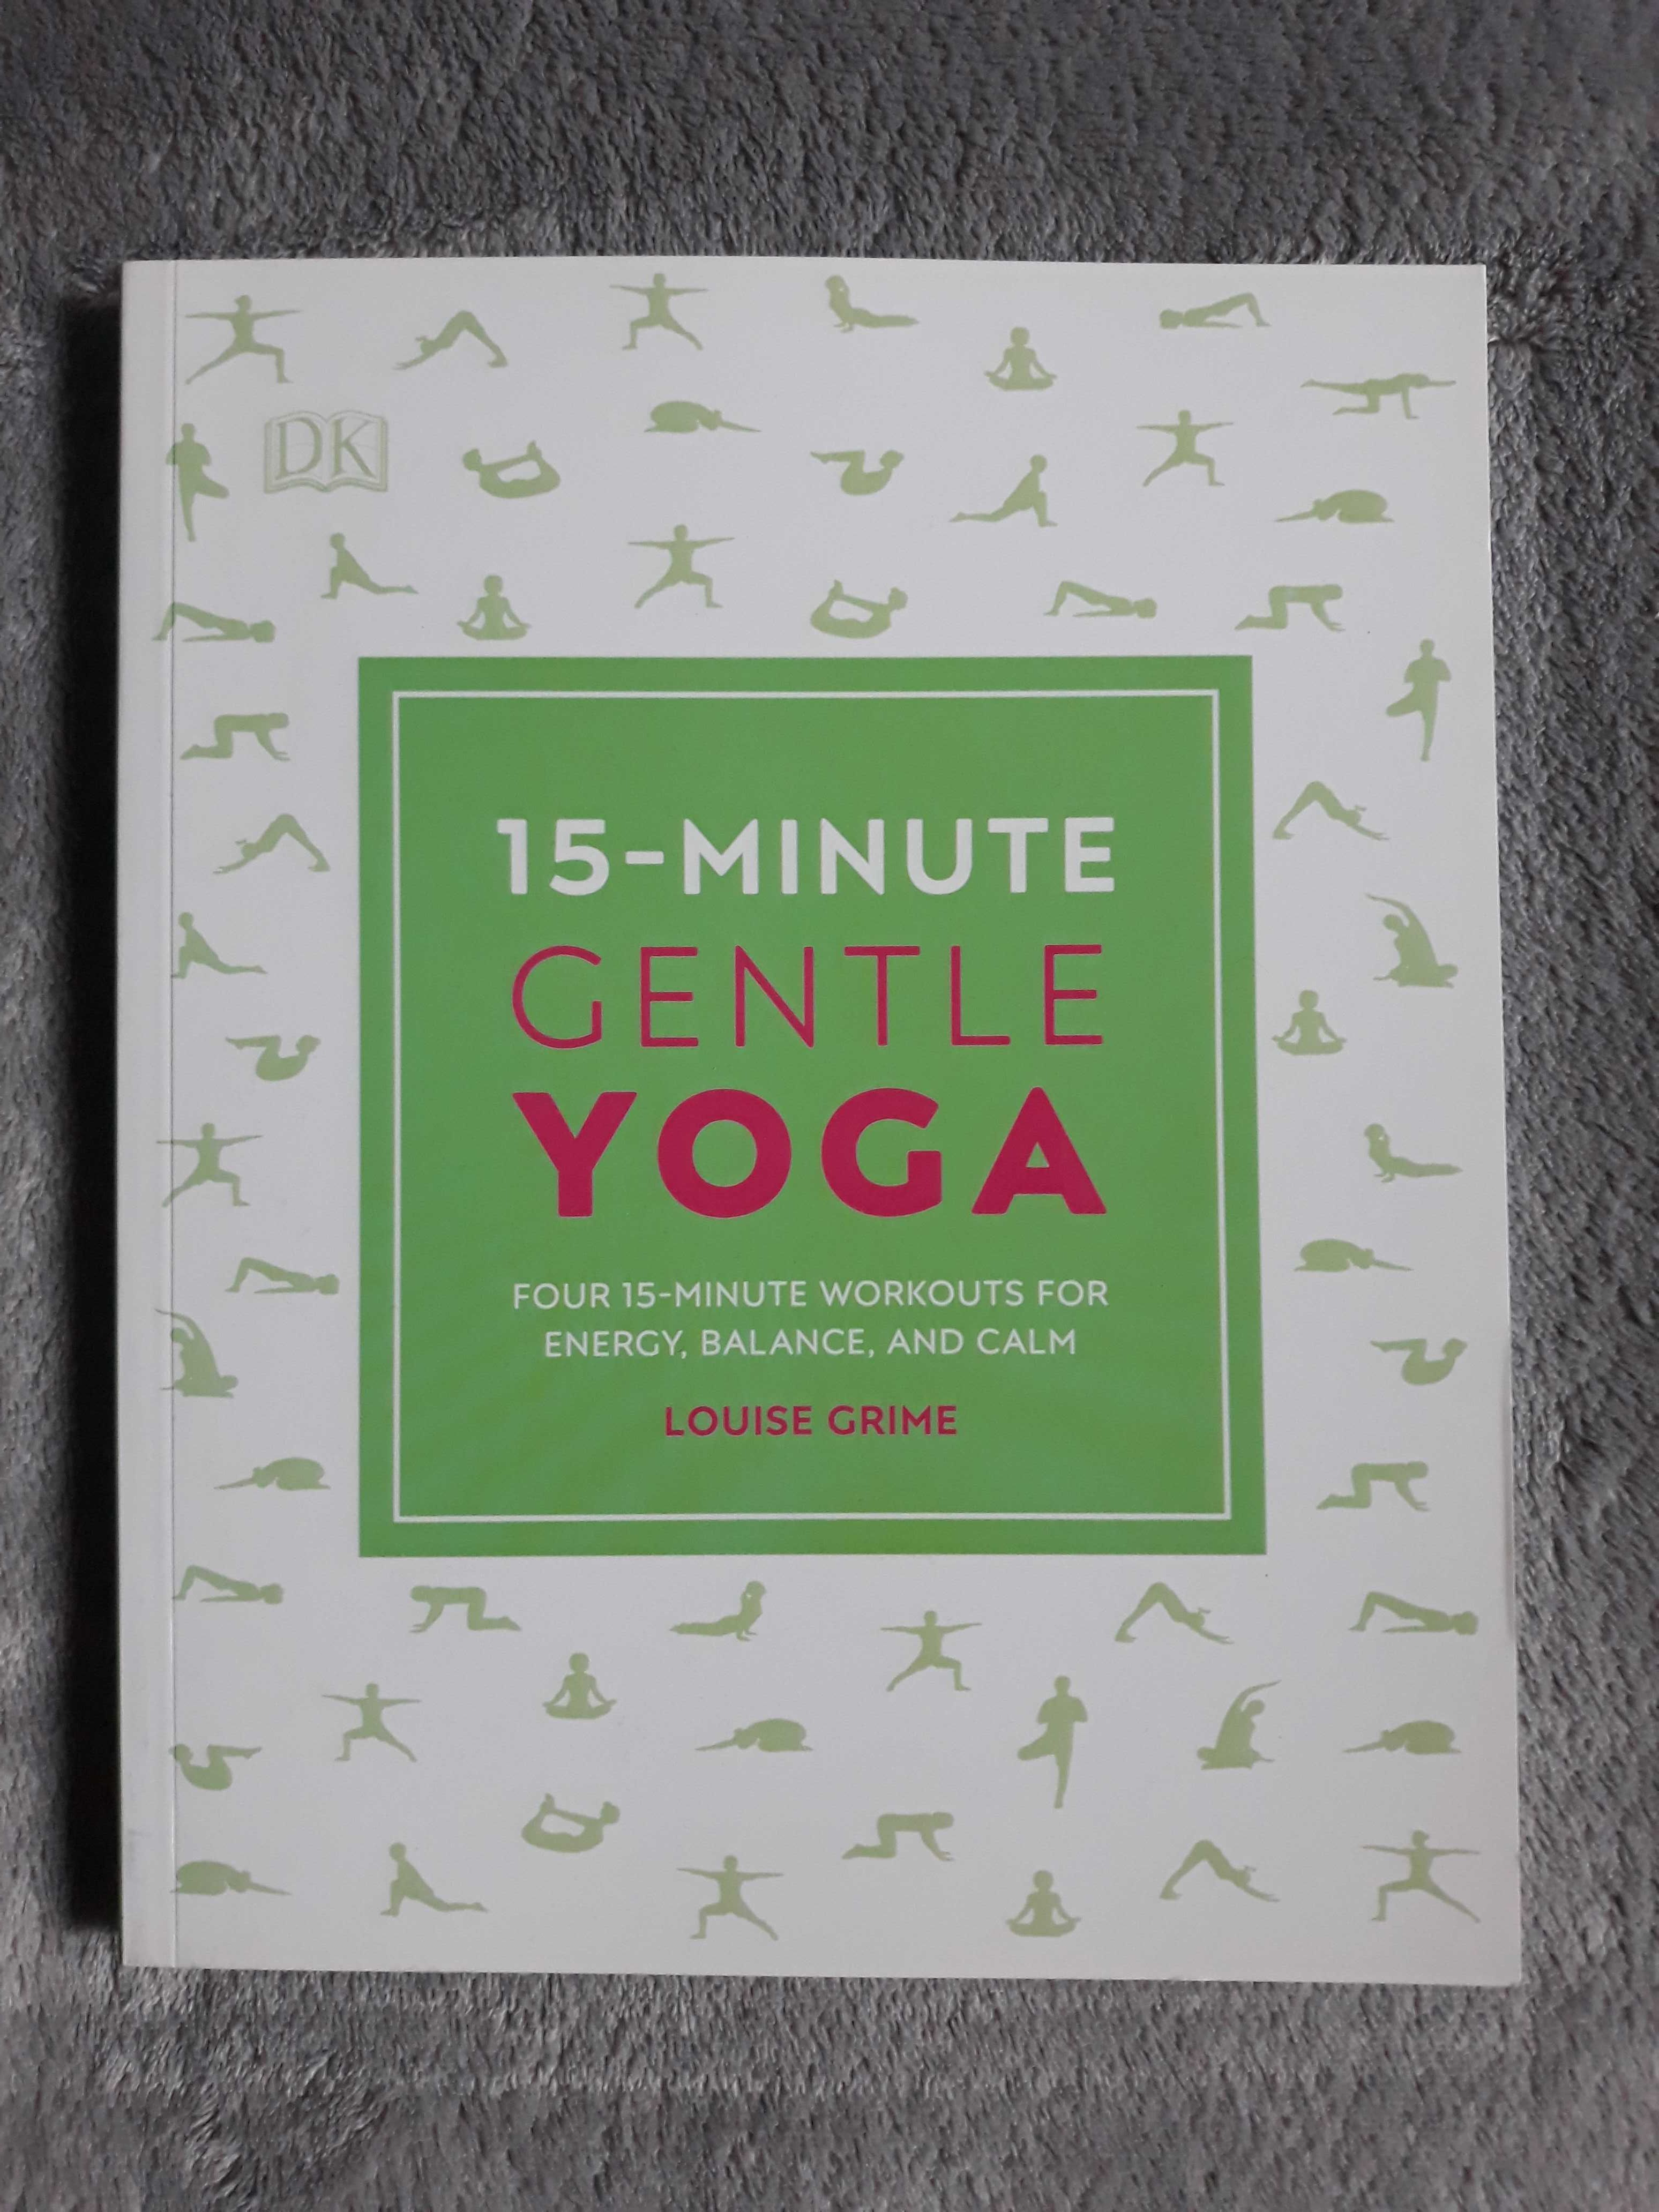 15- minute Gentle Yoga - Louise Grime Książka o jodze joga